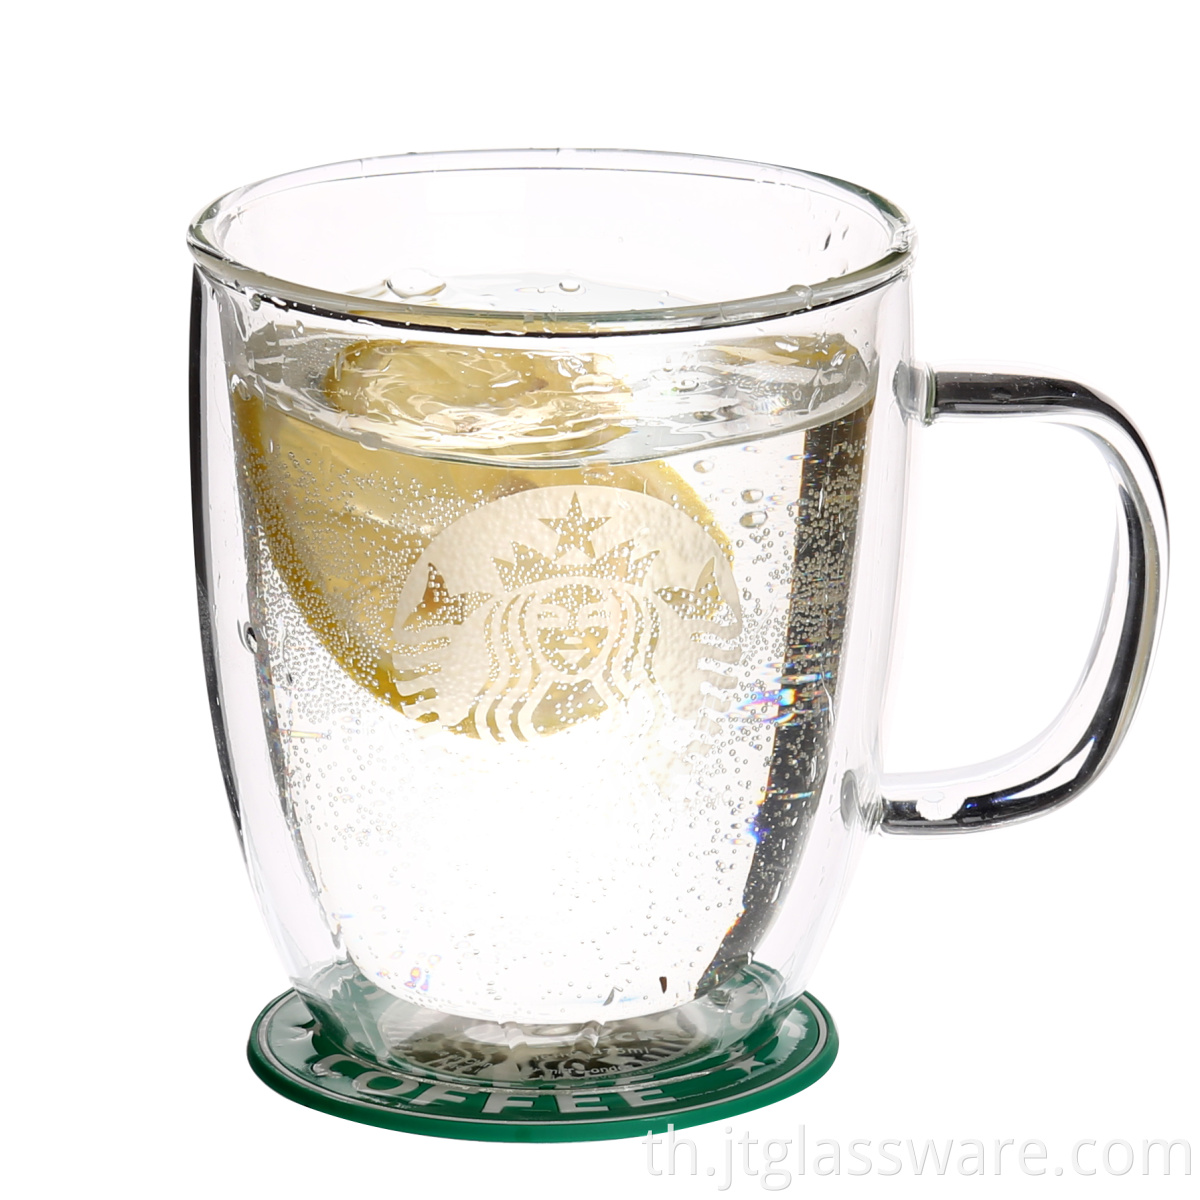 Double Layered Borosilicate Glass Cups